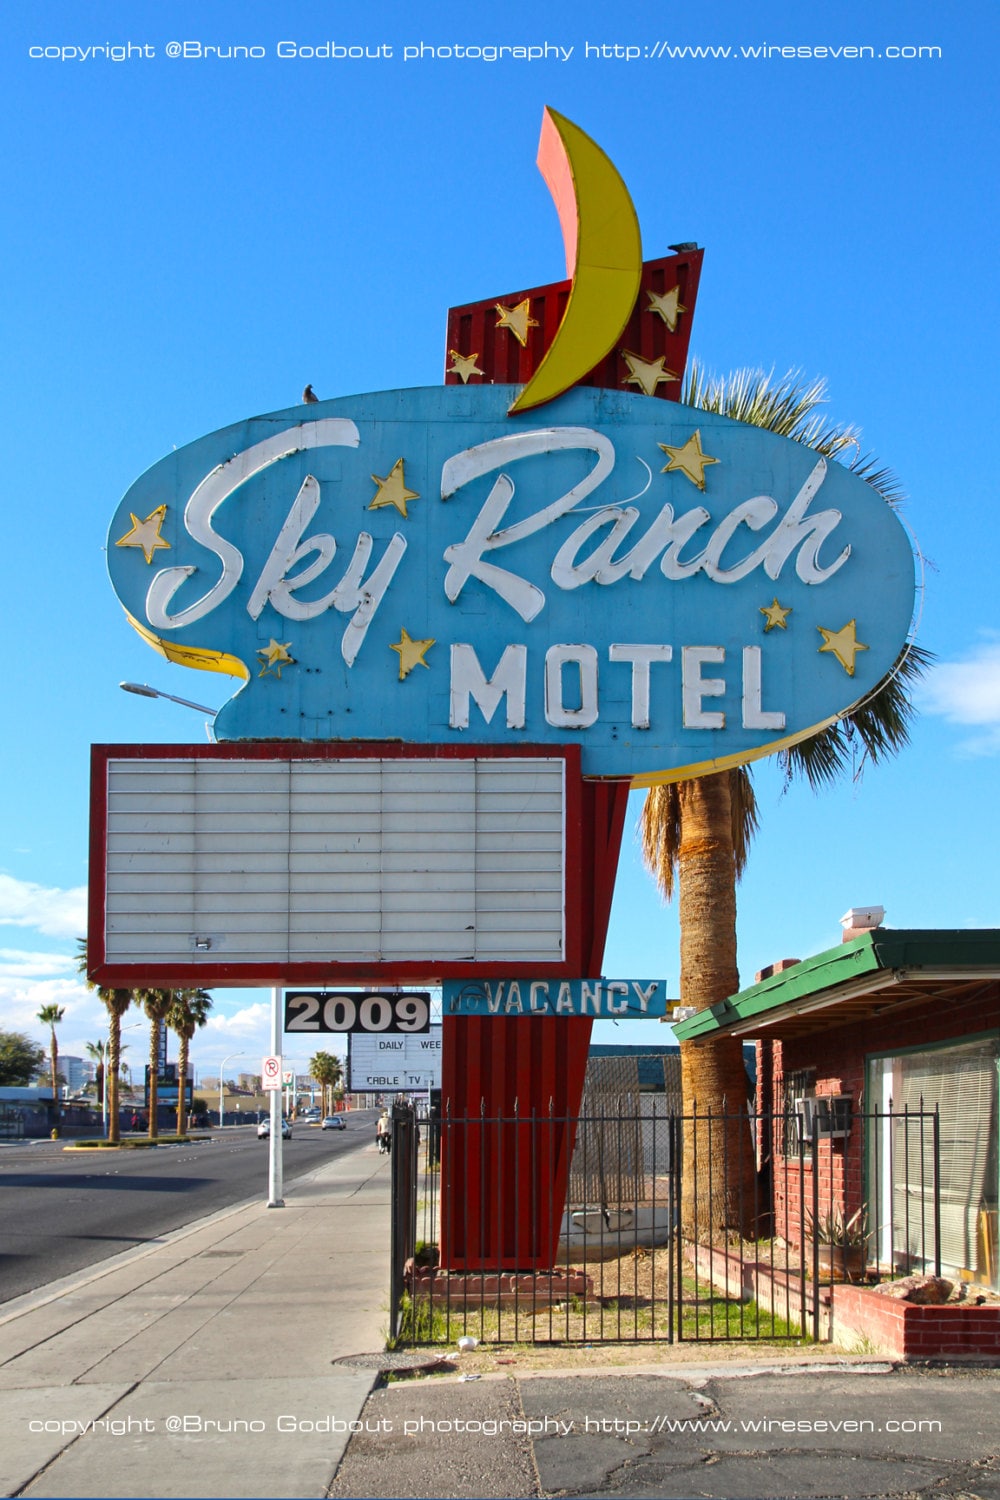 Skyranch Motel Las Vegas NV 2015